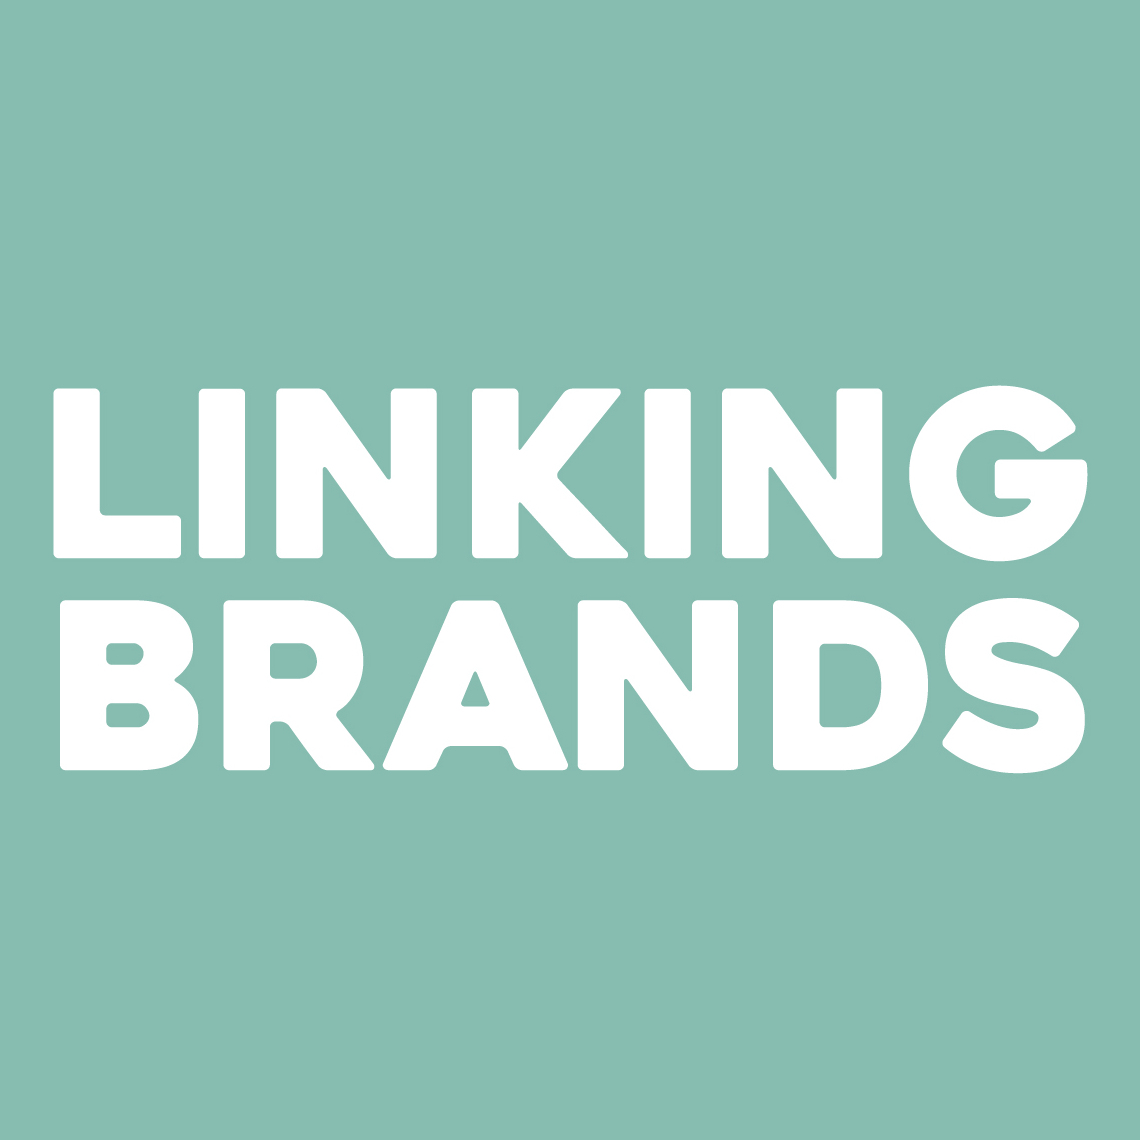 LINKING BRANDS LIB GmbH